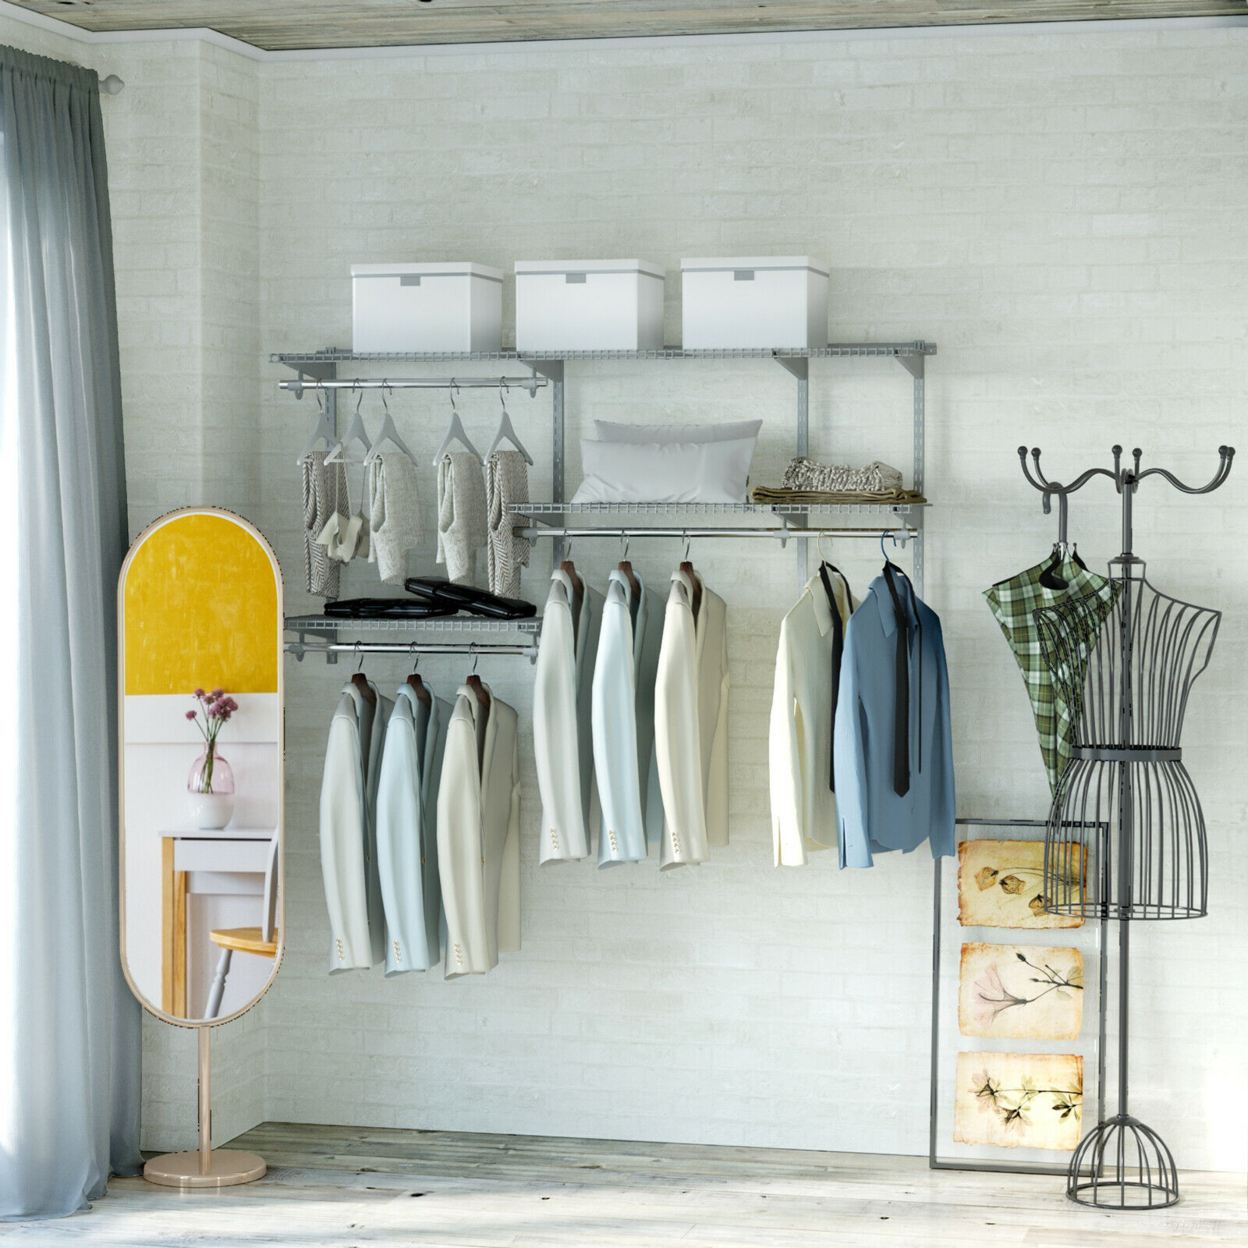 Custom Closet Organizer Kit 3 To 5 FT Wall-mounted Closet System W/Hang Rod Grey